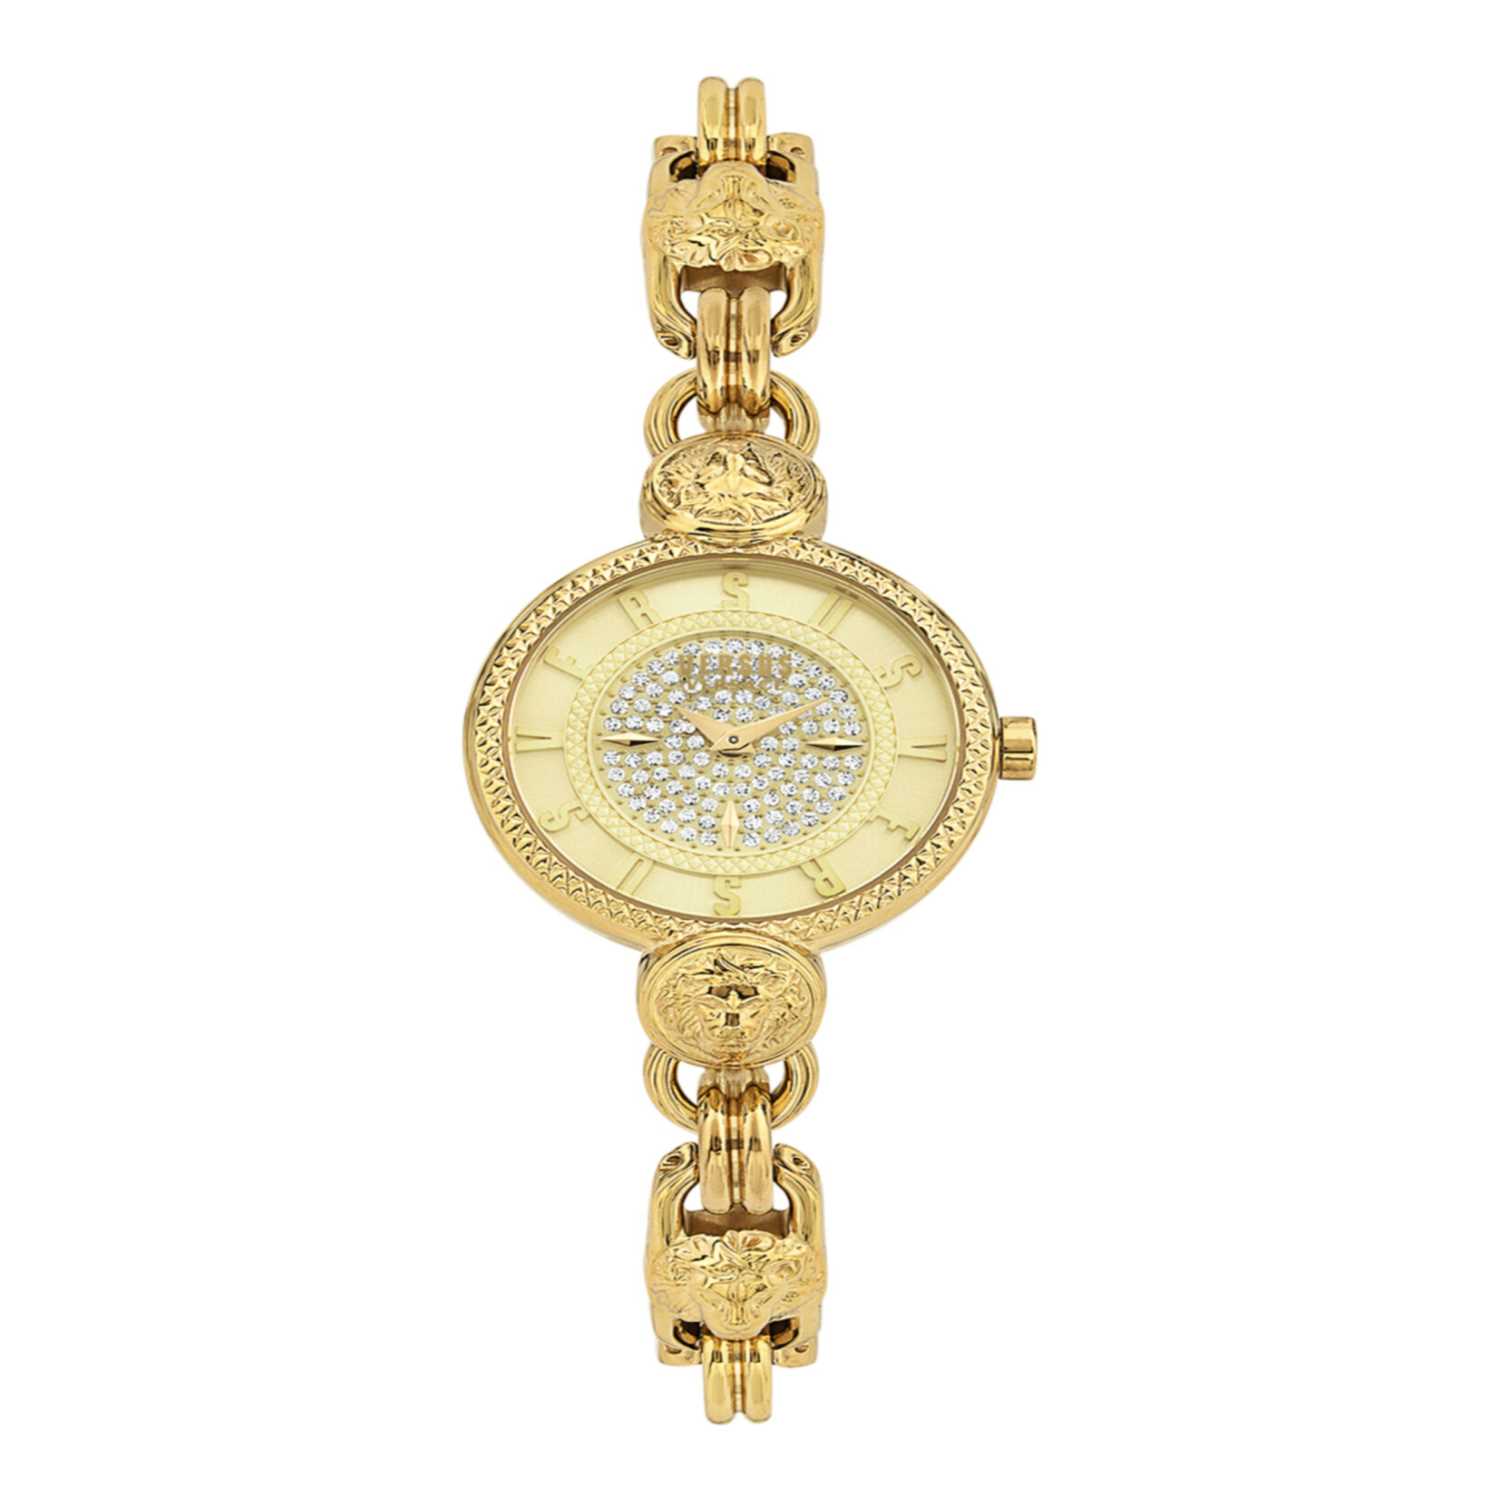 Reloj Les Docks Petite Vsp470721 Versus Versace para Mujer en Dorado